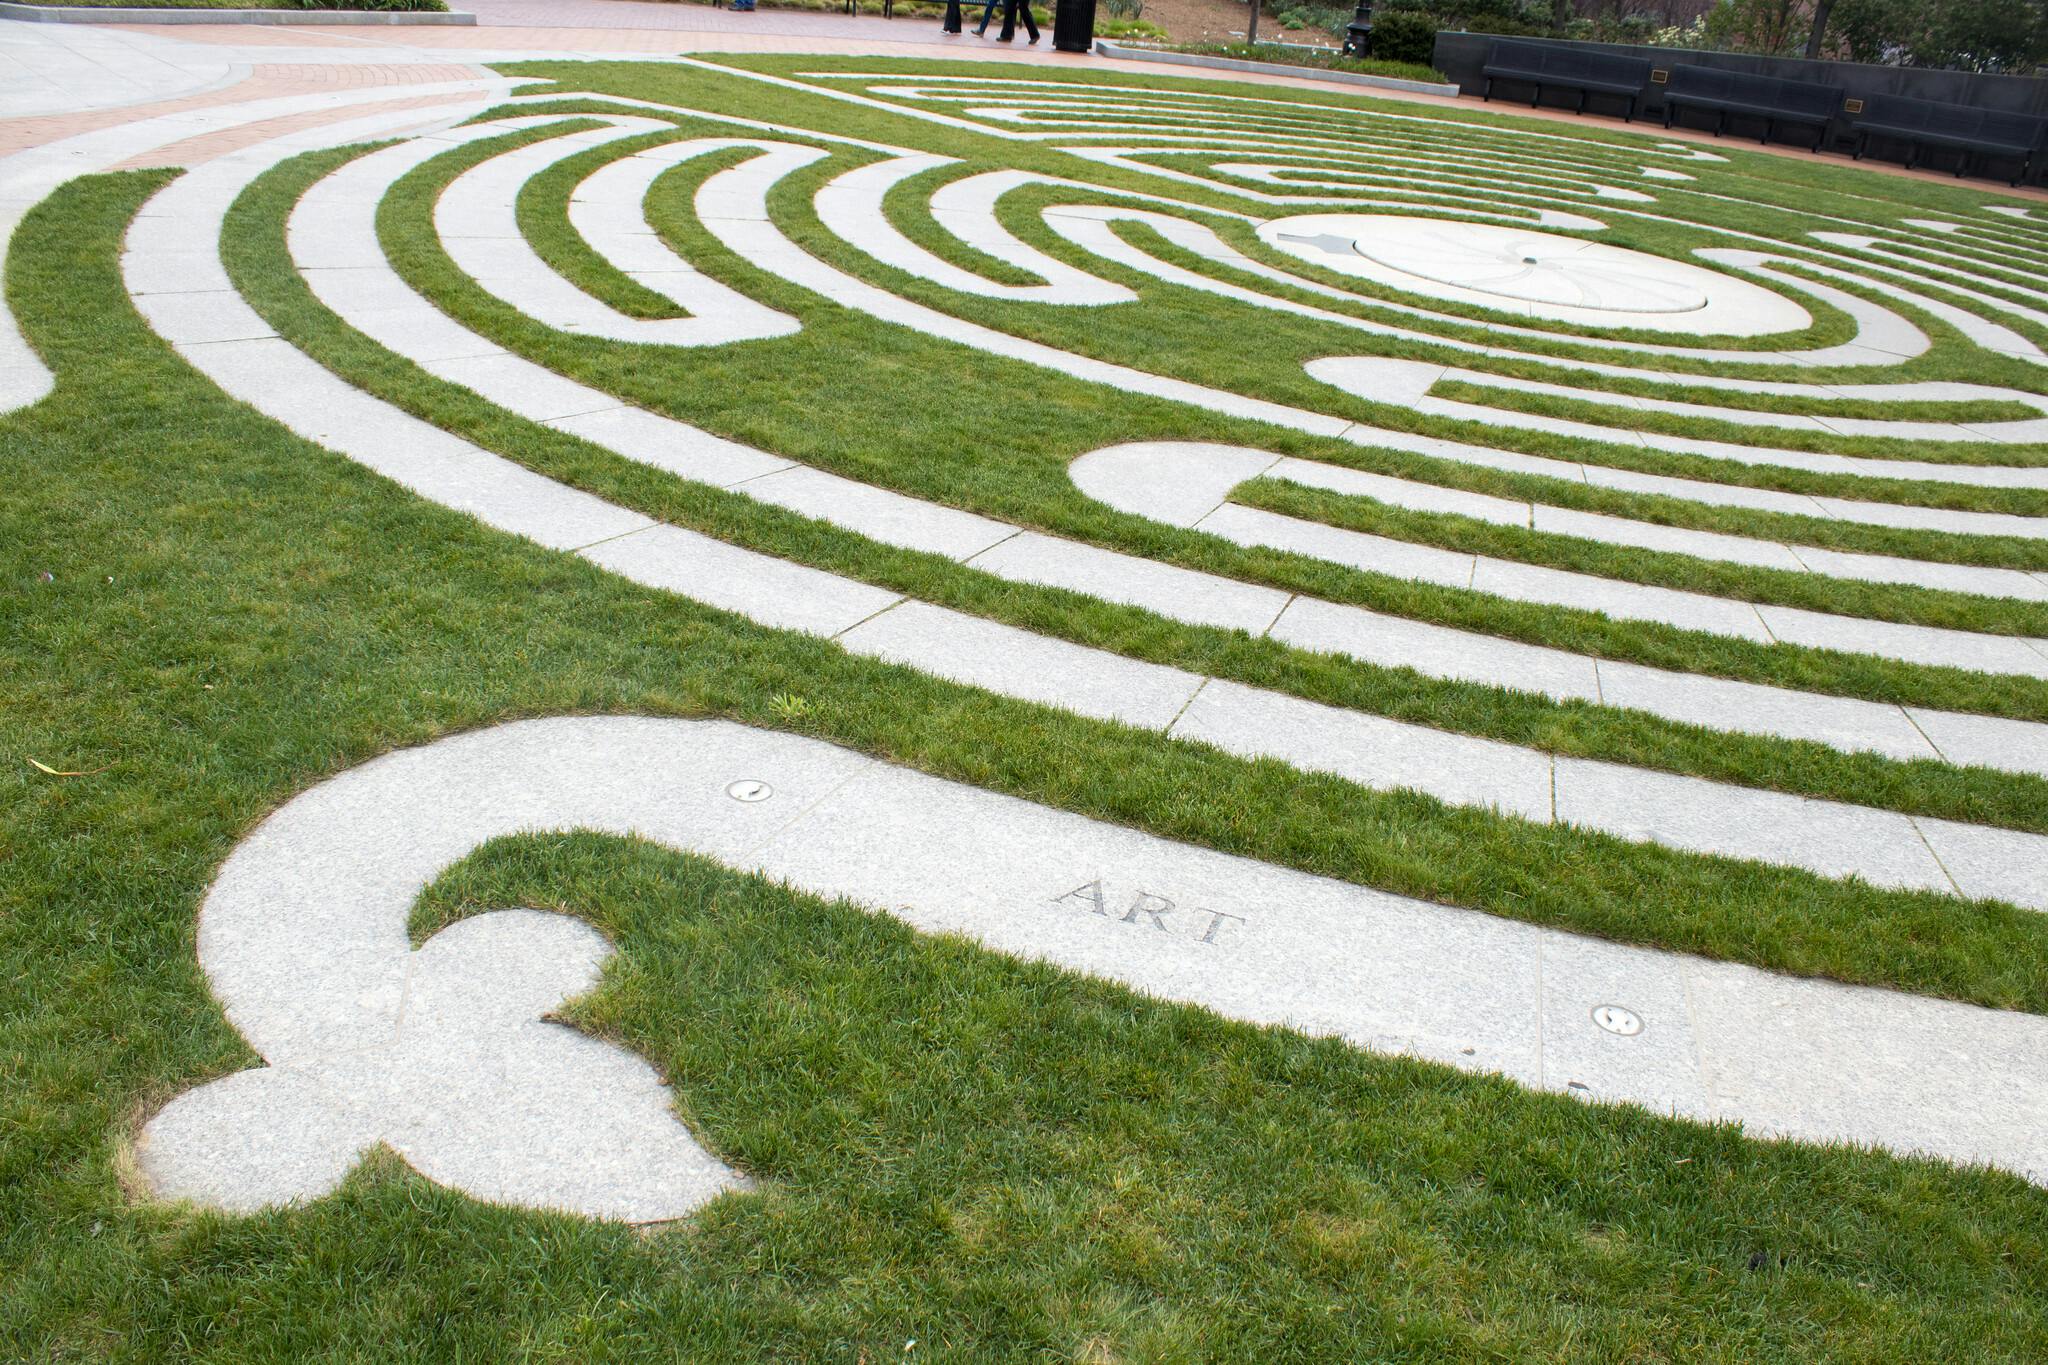 Labyrinth made of a path cut through grass